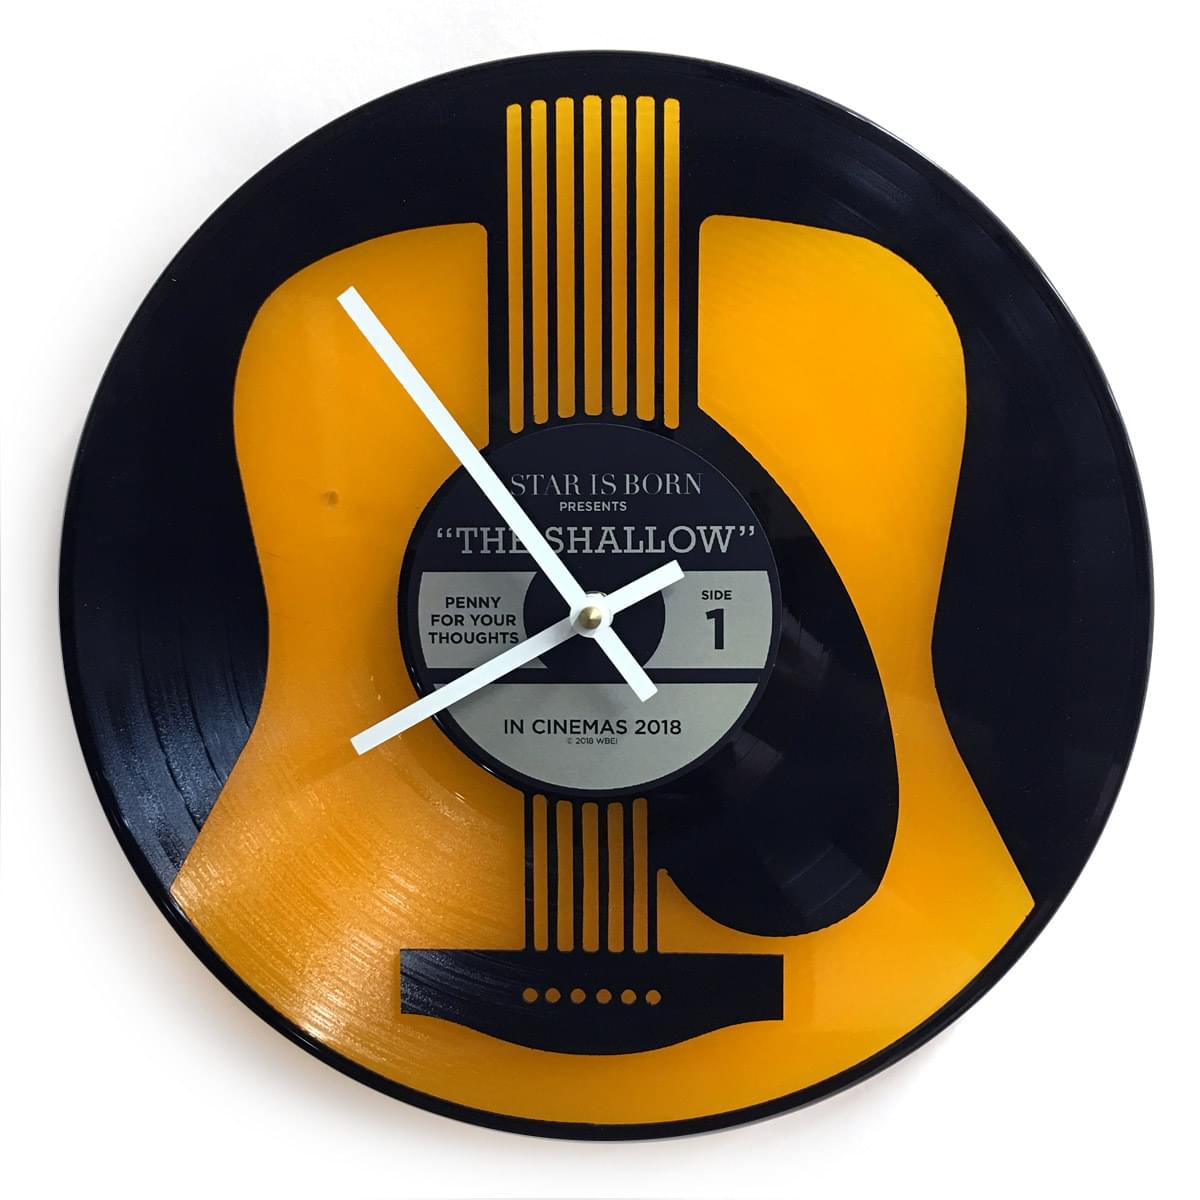 Recycled Vinyl Record Custom Cut LP Wall Clock - 2 Layer